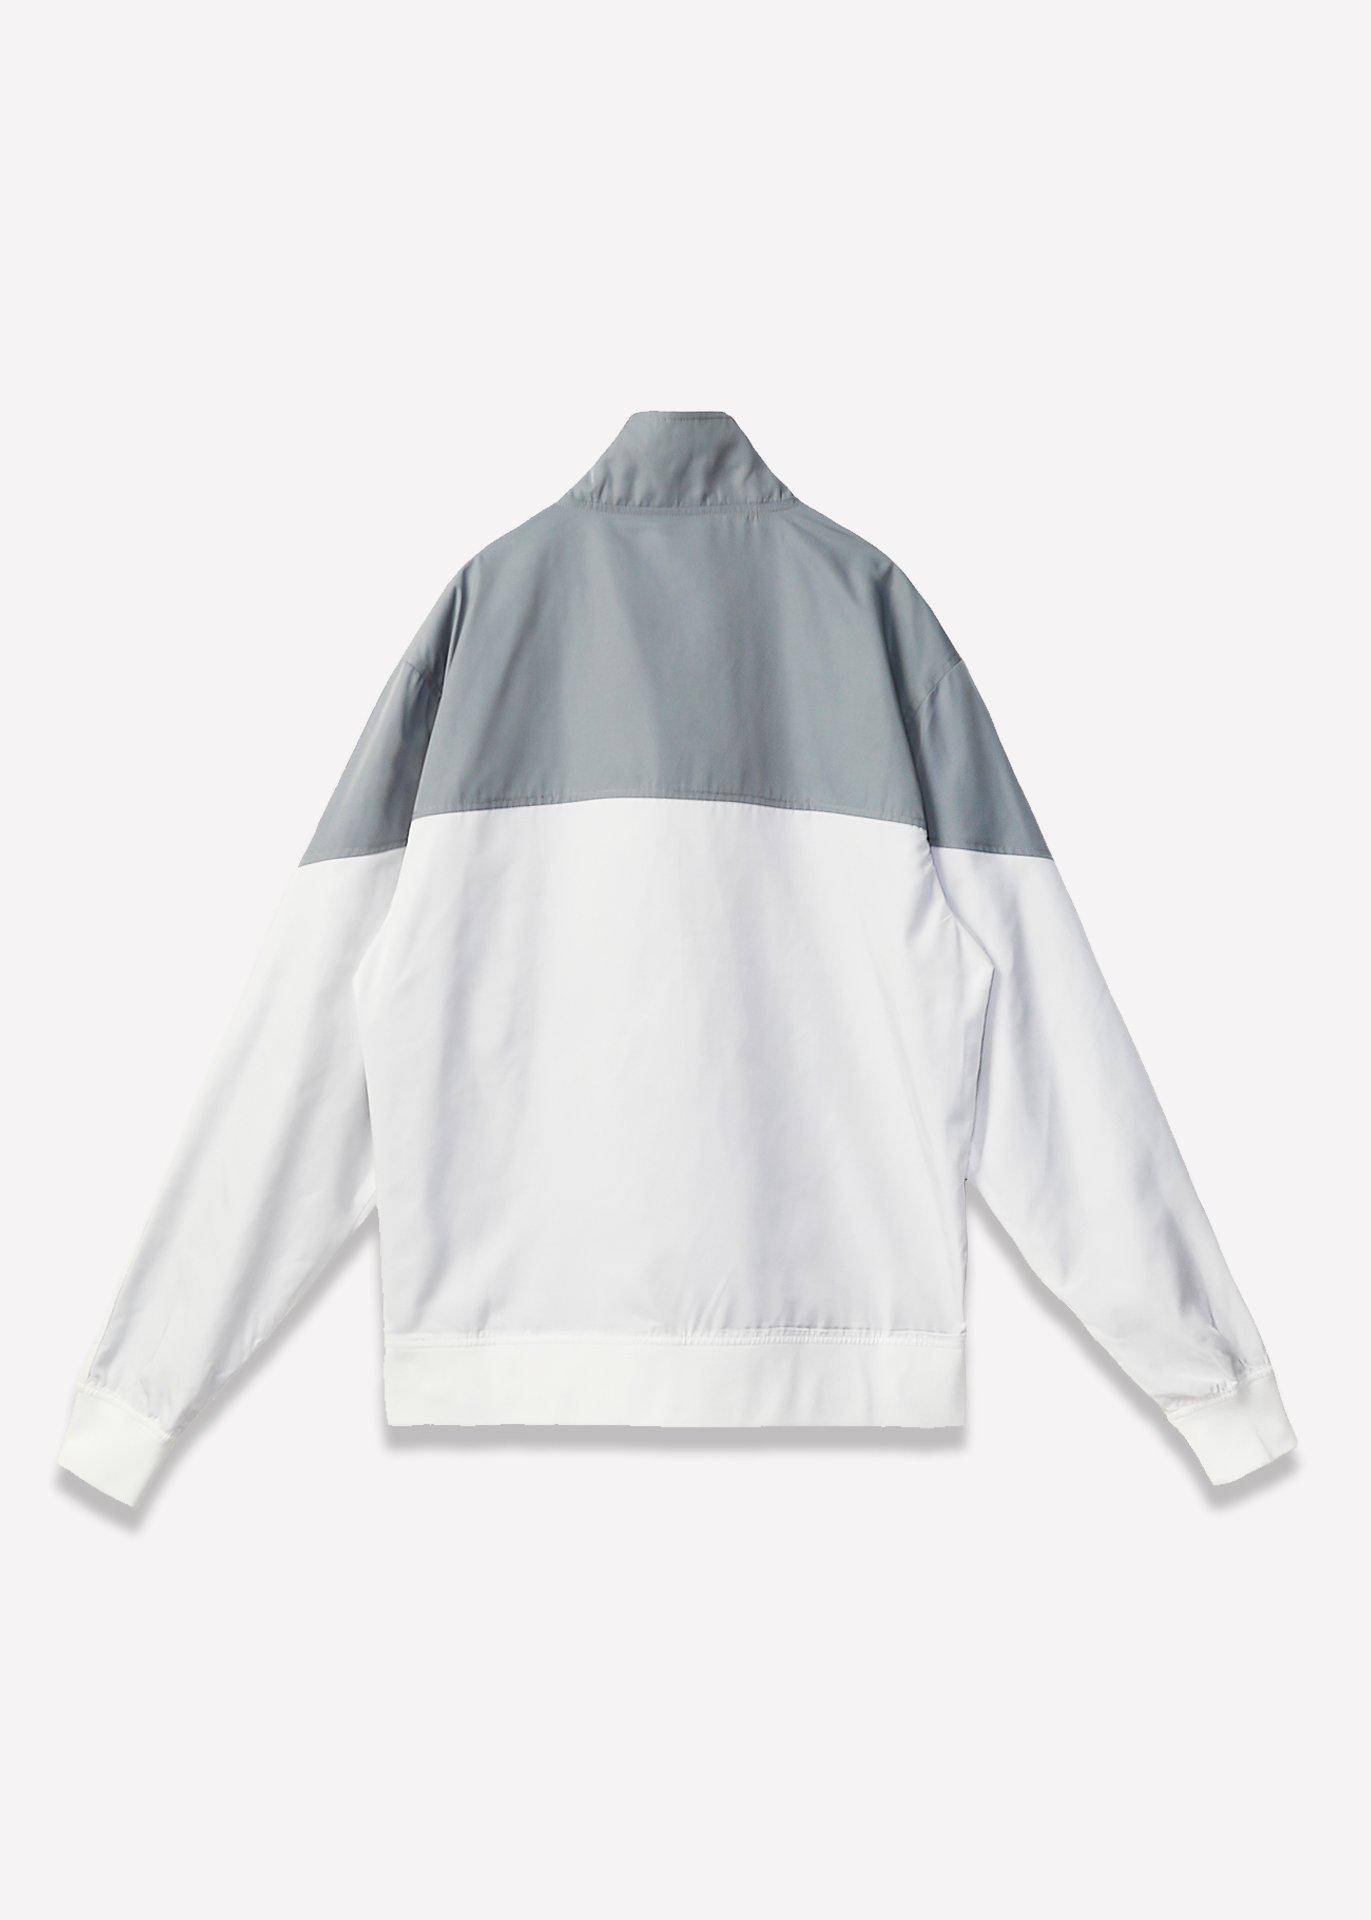 Blank State Men's Retro Swishy Track Jacket in White/Grey by Shop at Konus